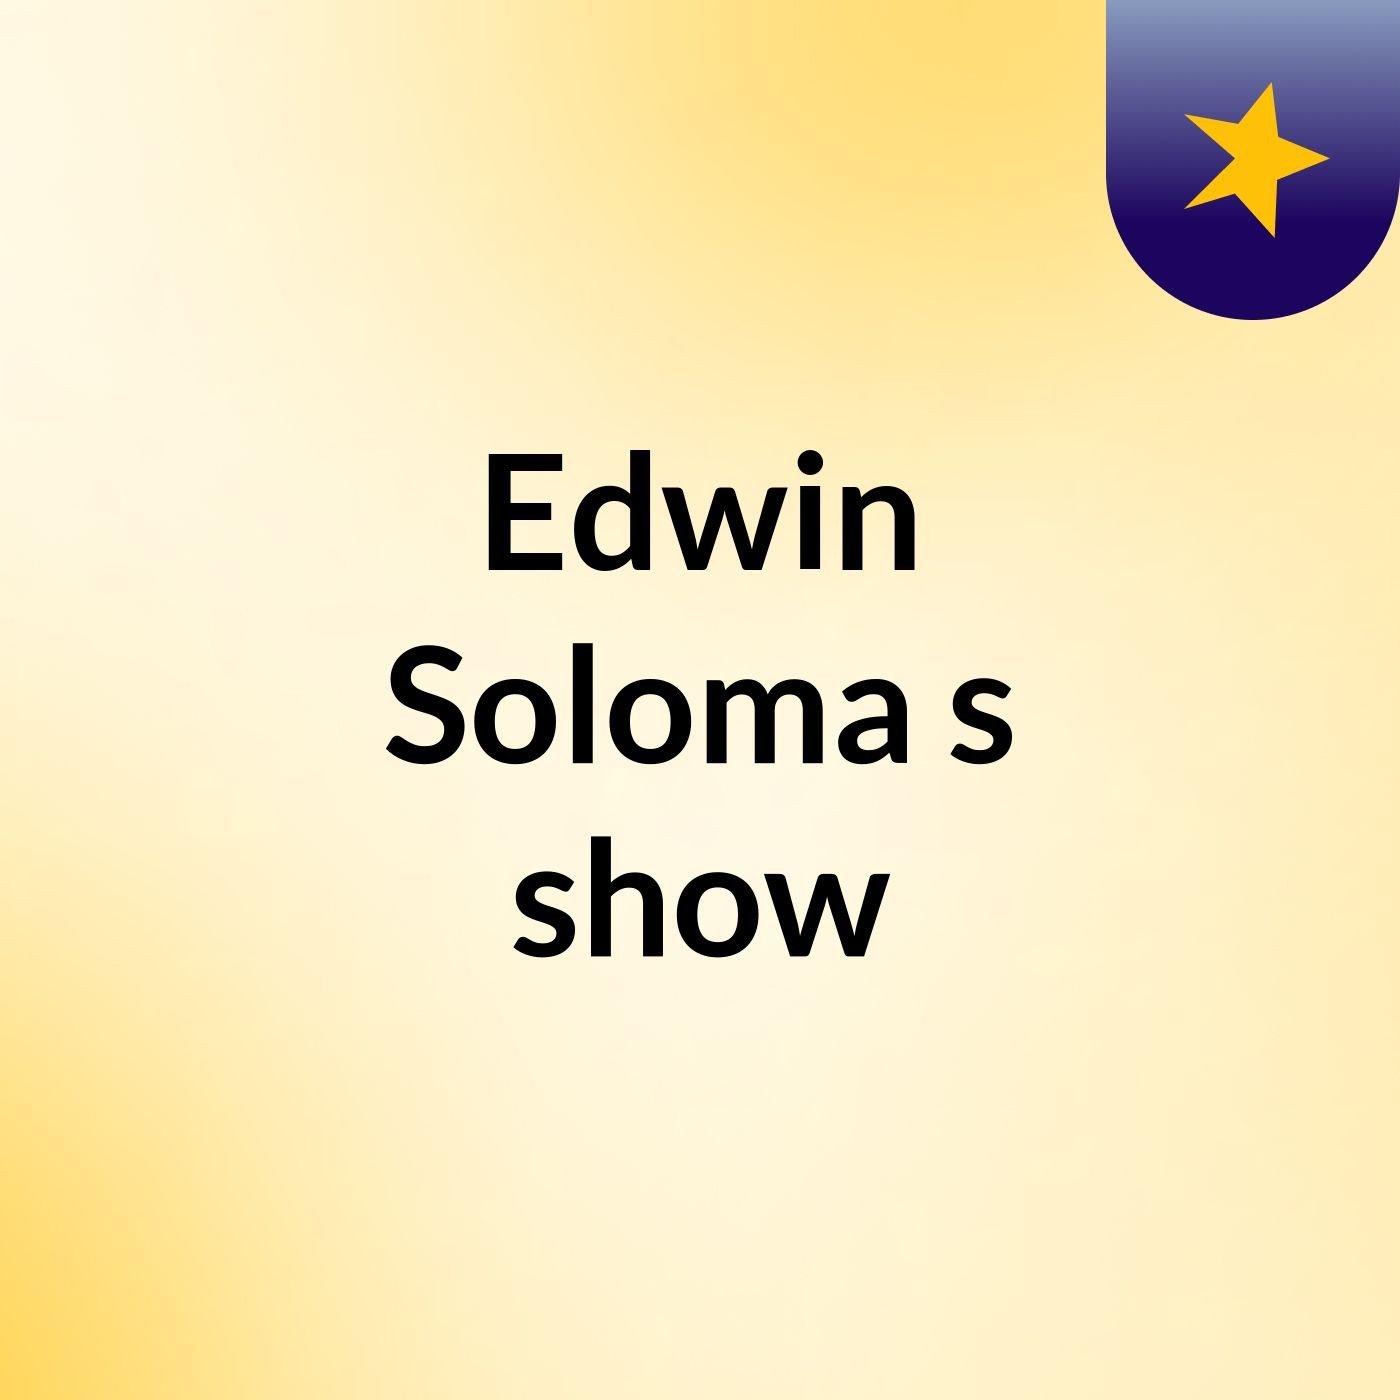 Edwin Soloma's show